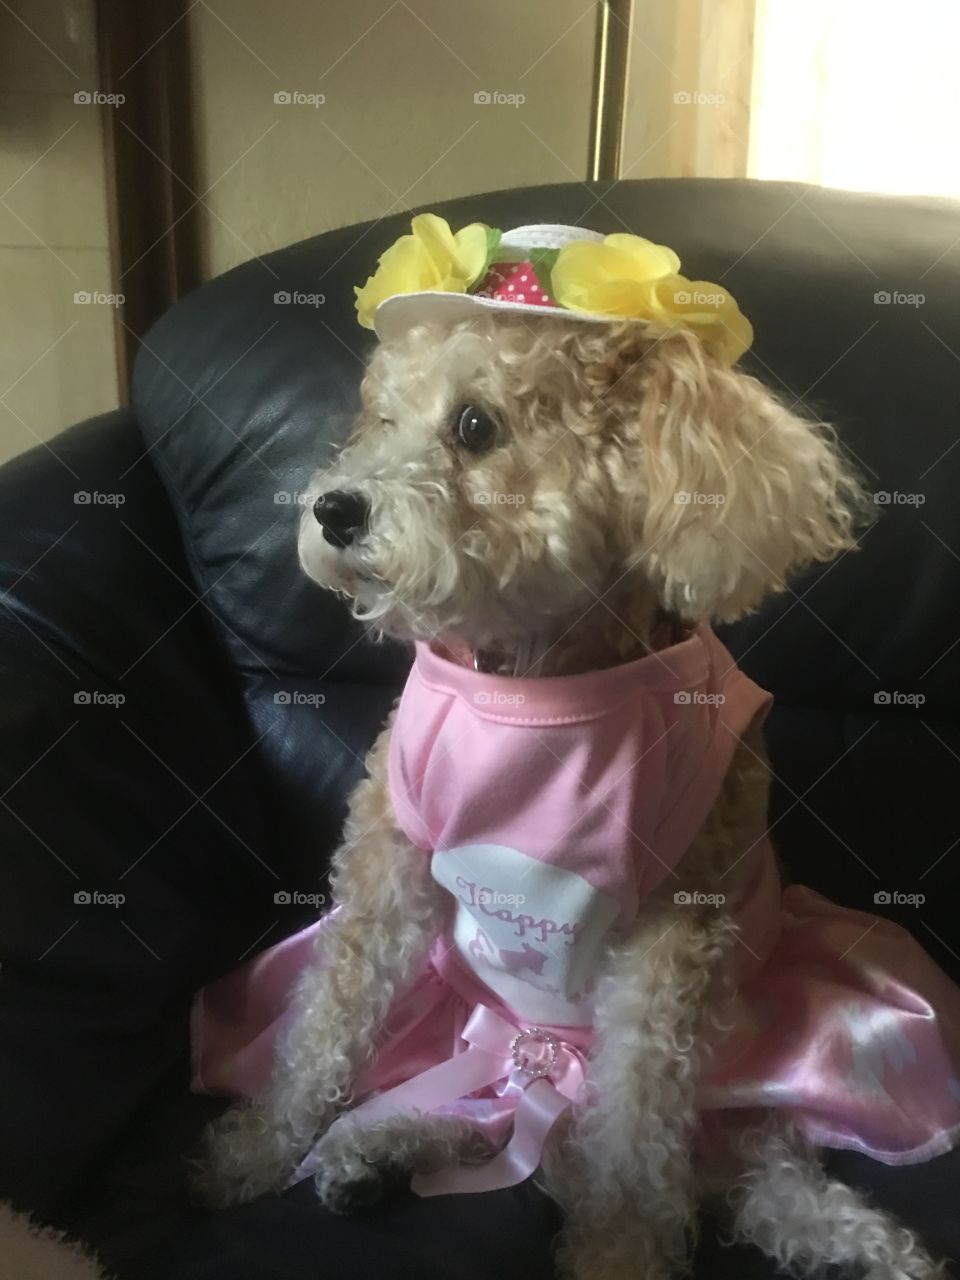 Doggie Easter bonnet